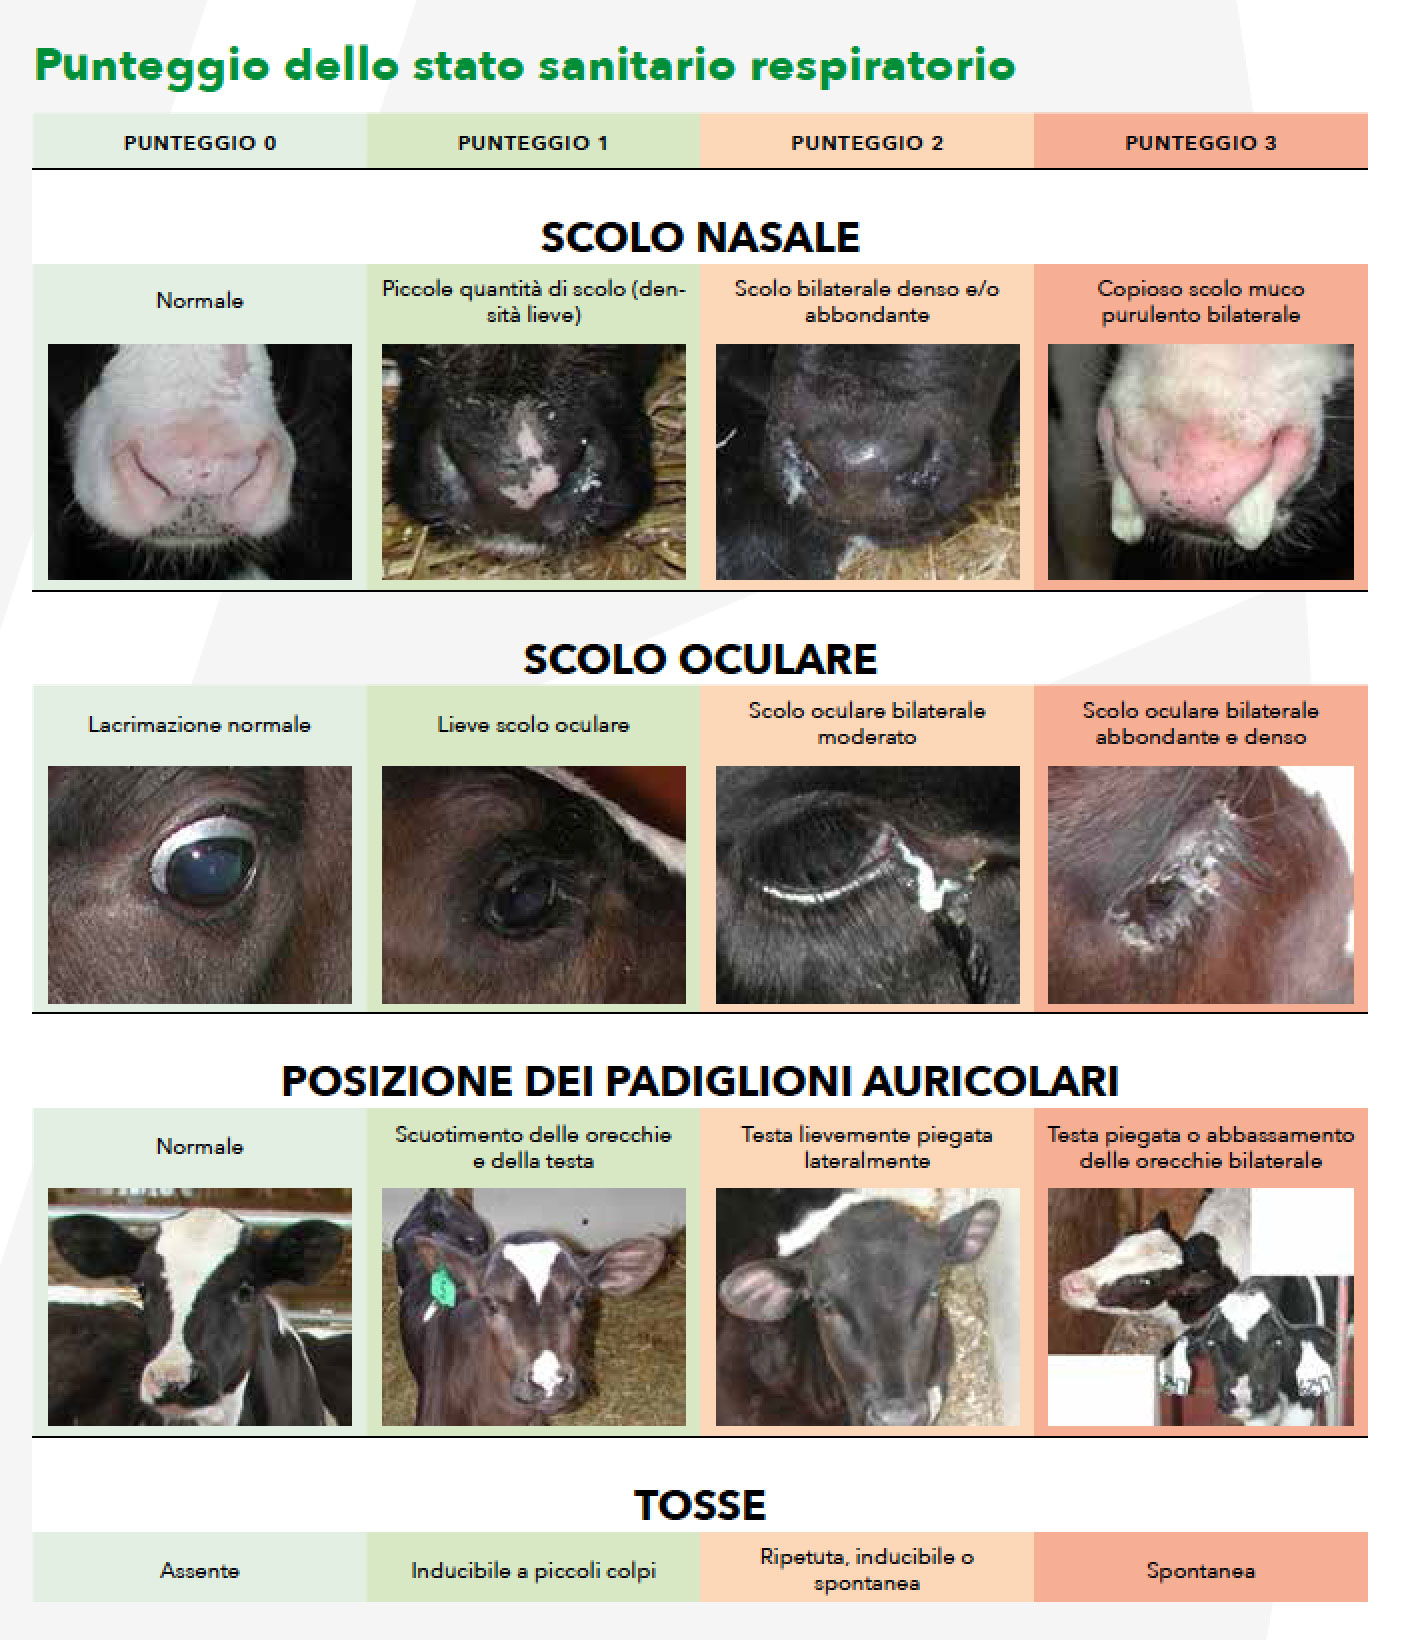 Tipi di infezioni nei vitelli e nei bovini